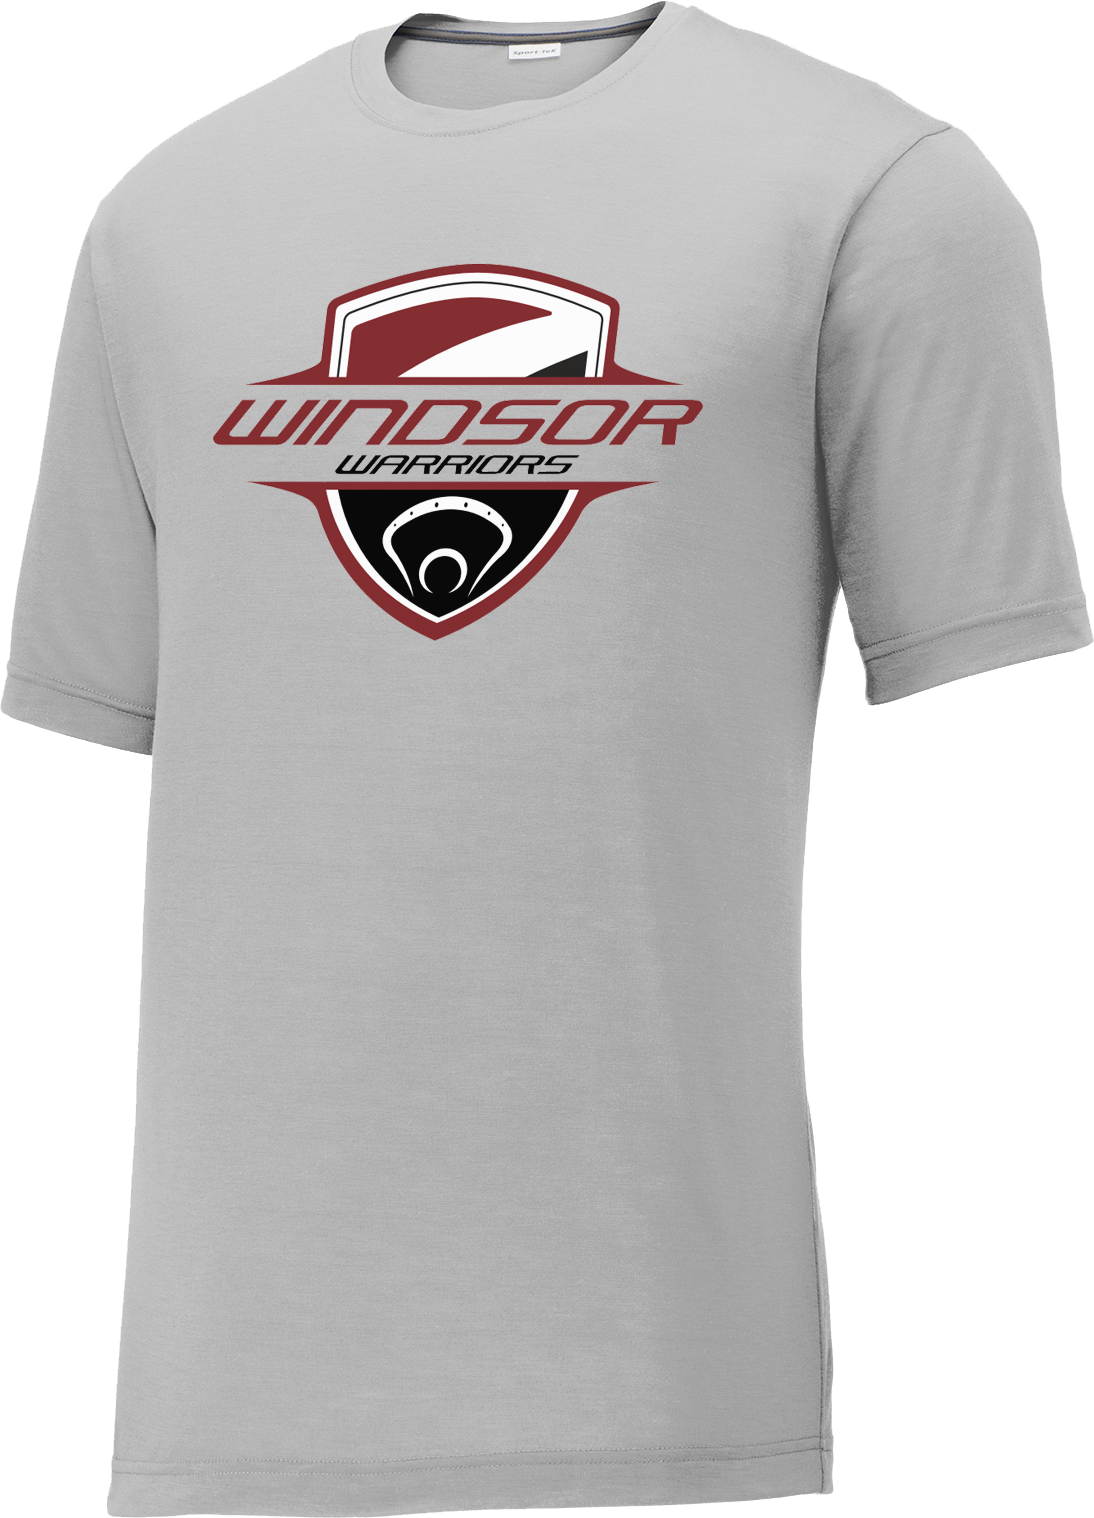 Windsor CottonTouch Performance T-Shirt